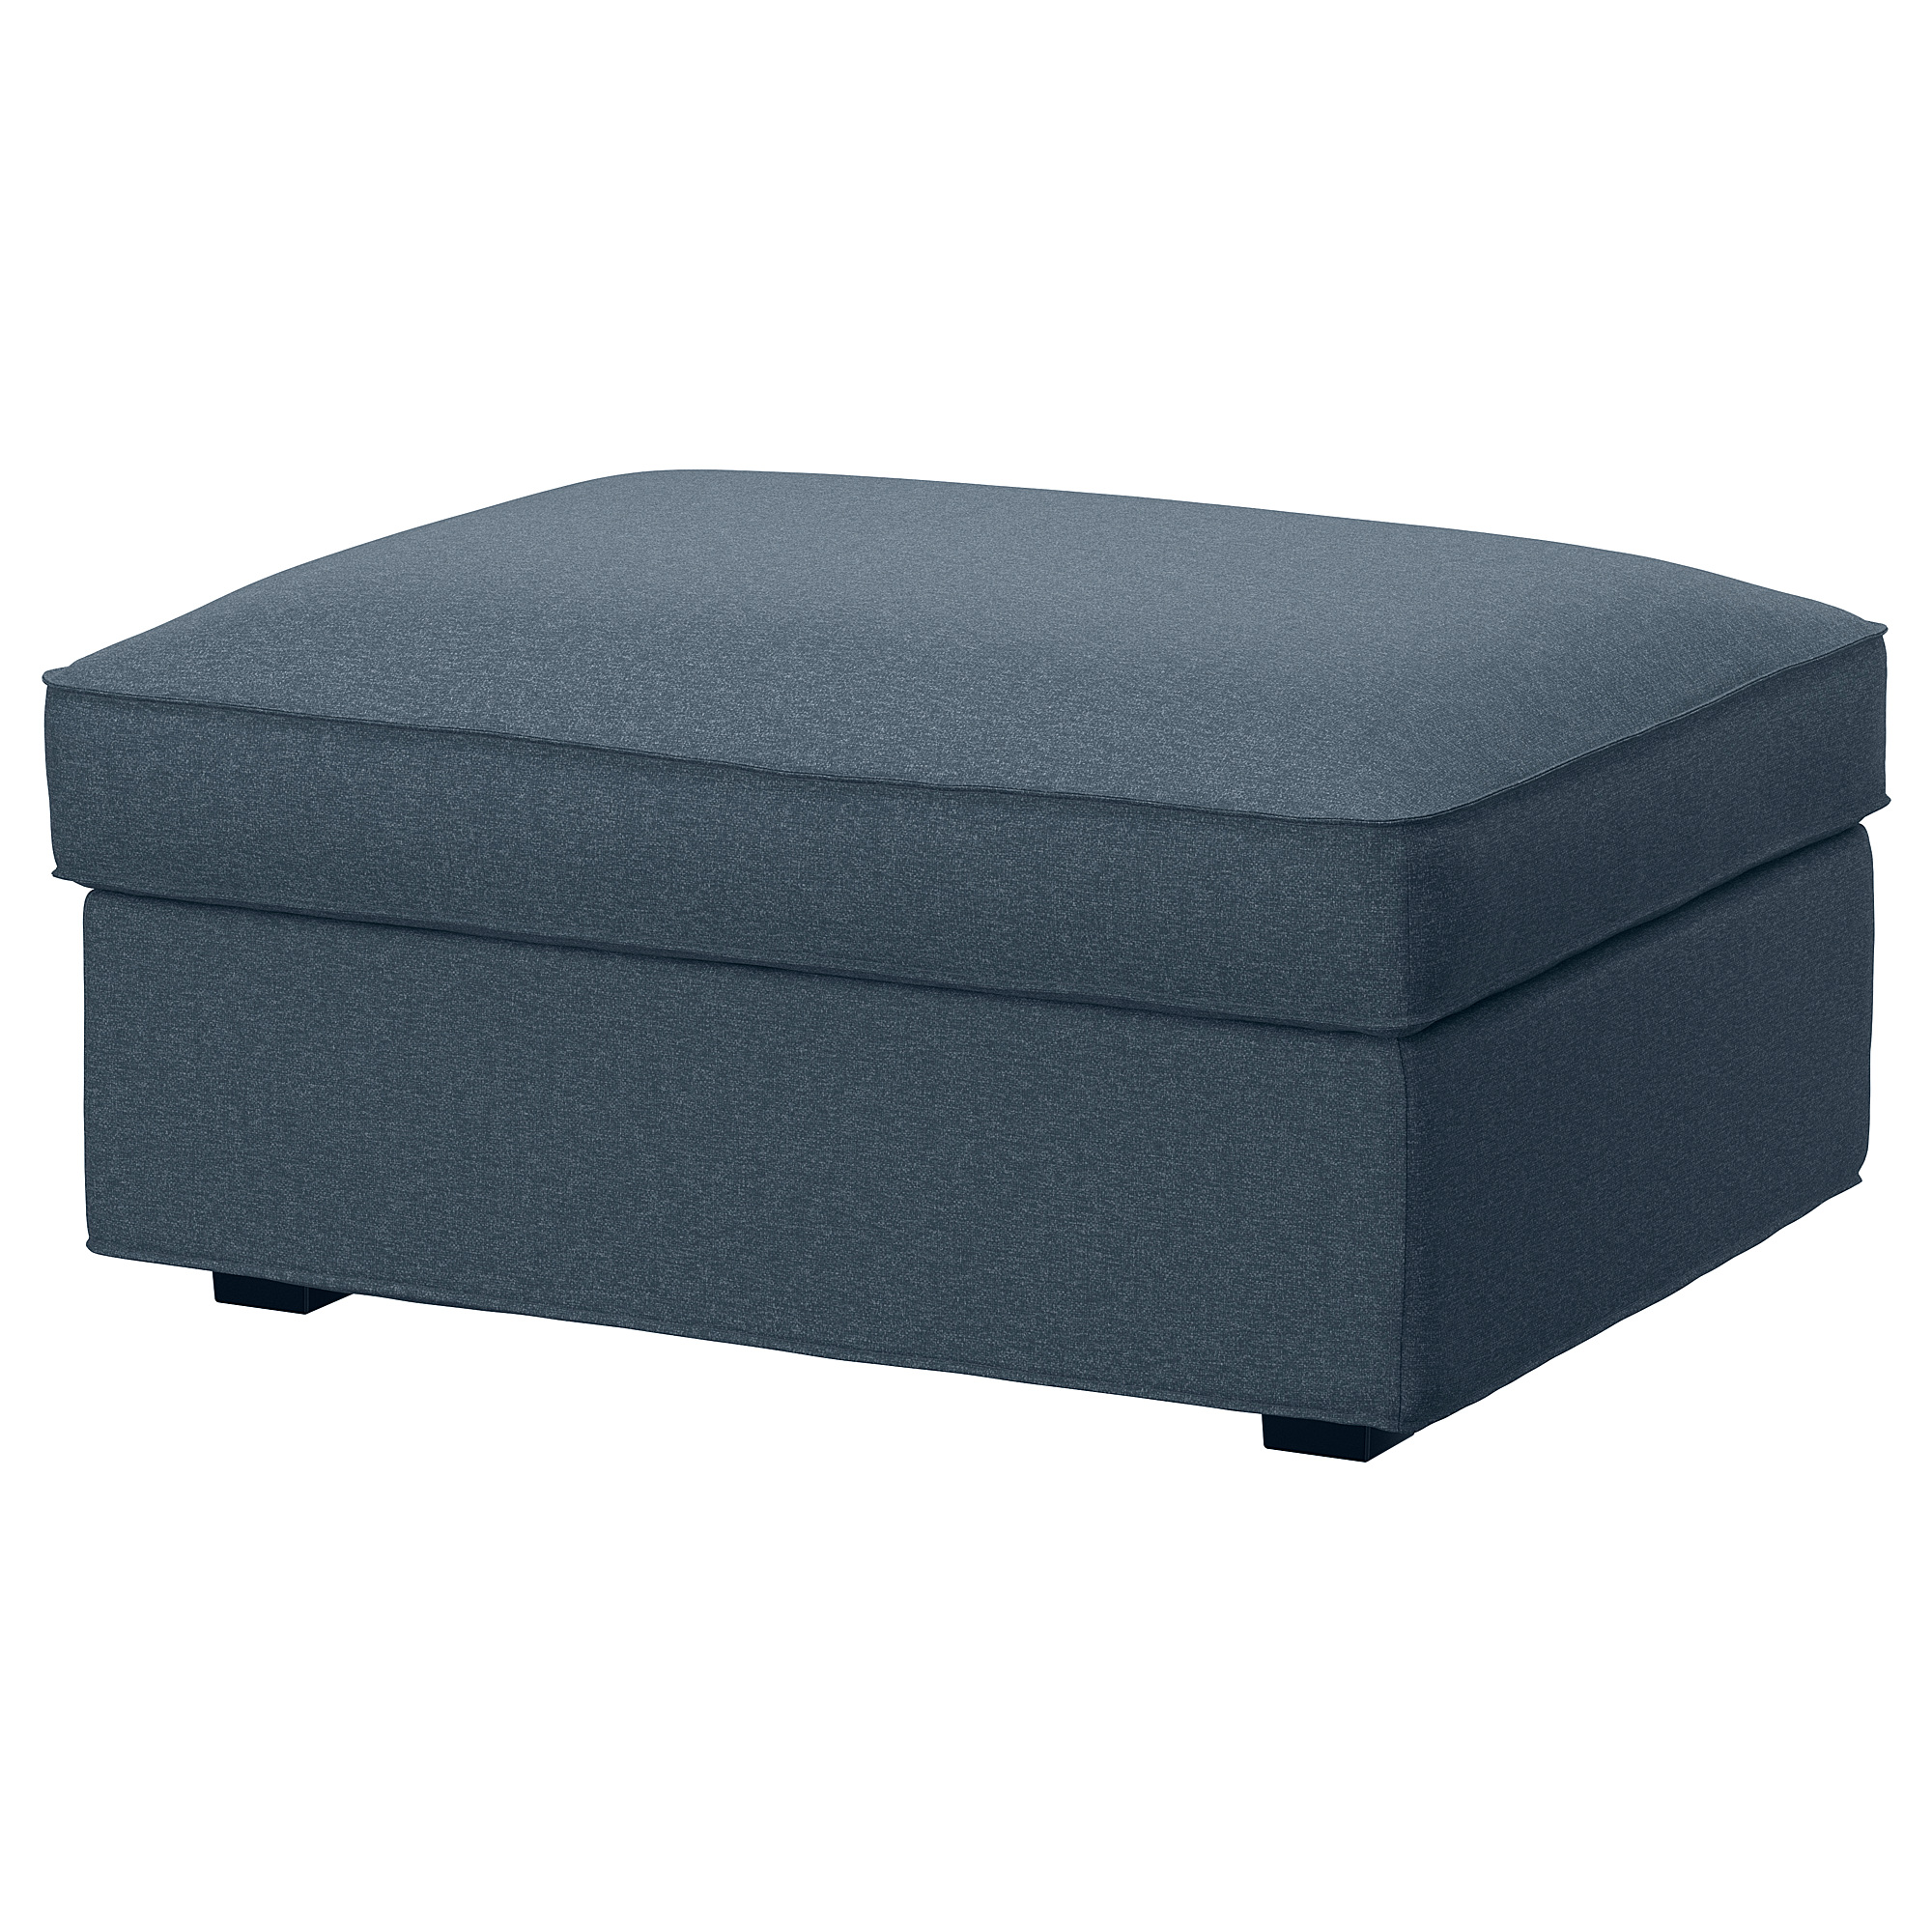 KIVIK footstool with storage